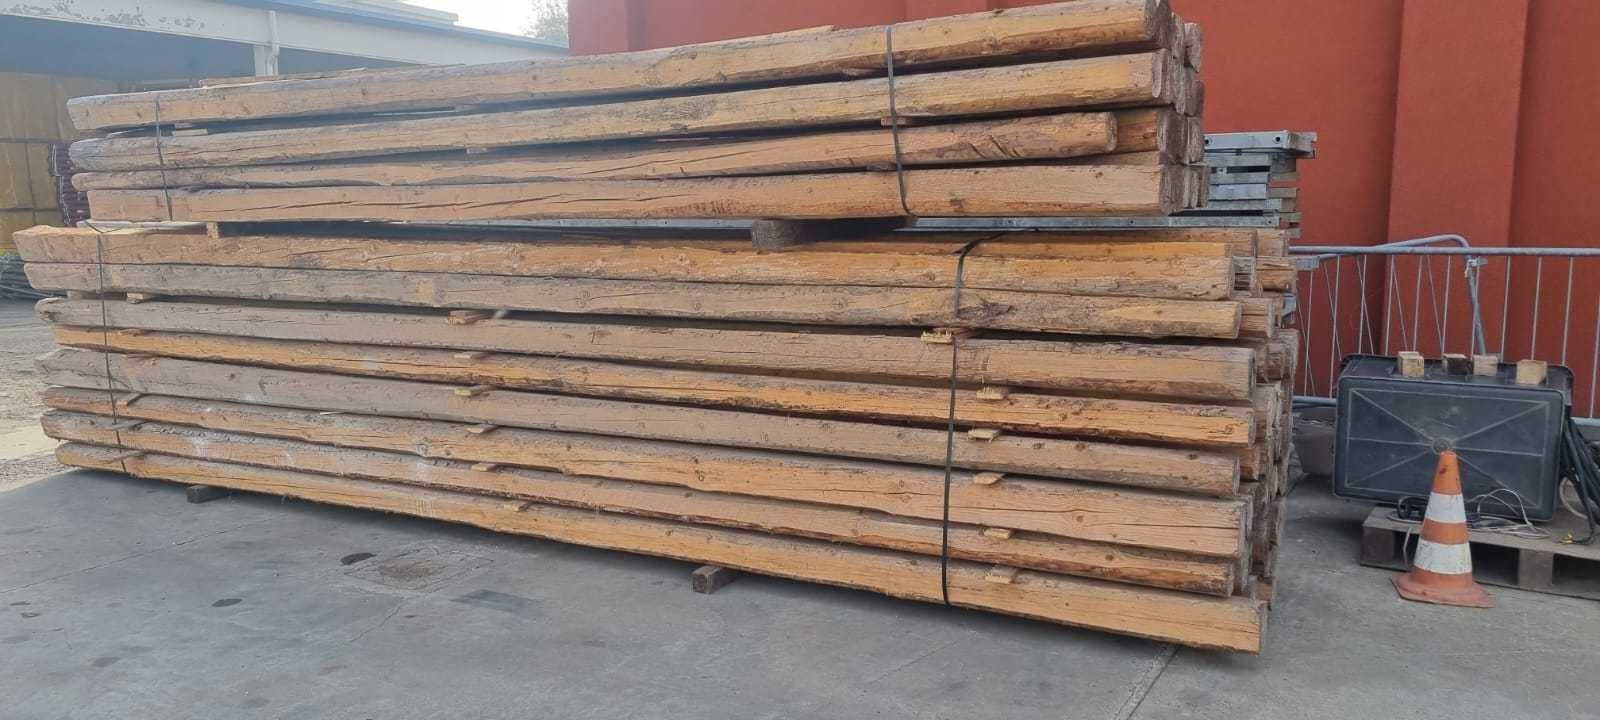 Grinda / lemn constructii, grinzi 15x15 grinzi 12x12